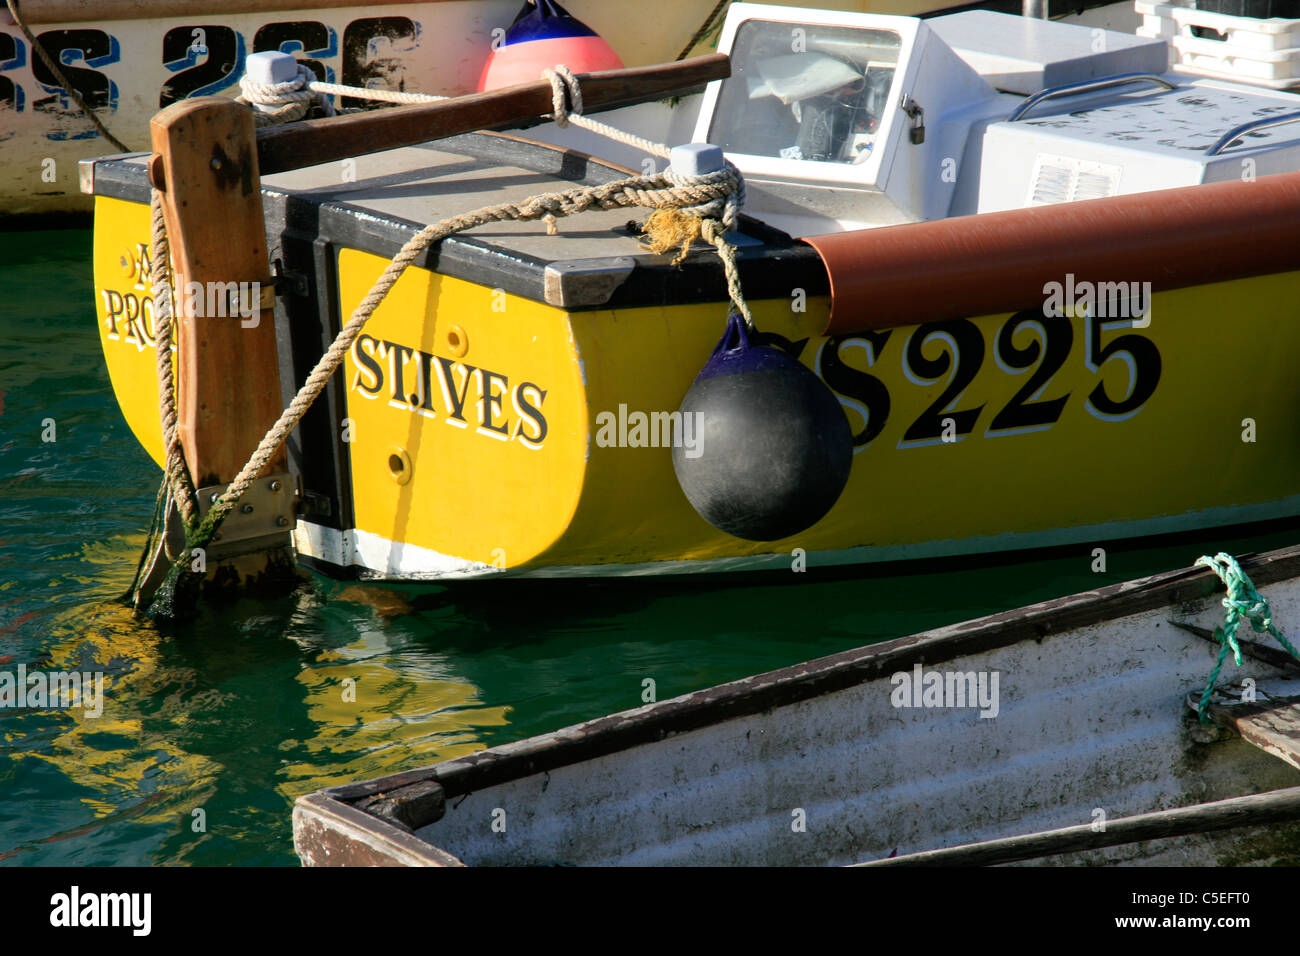 Yellow Fishing Boat, St Ives, Cornwall. Photograph by Kim Craig. Stock Photo